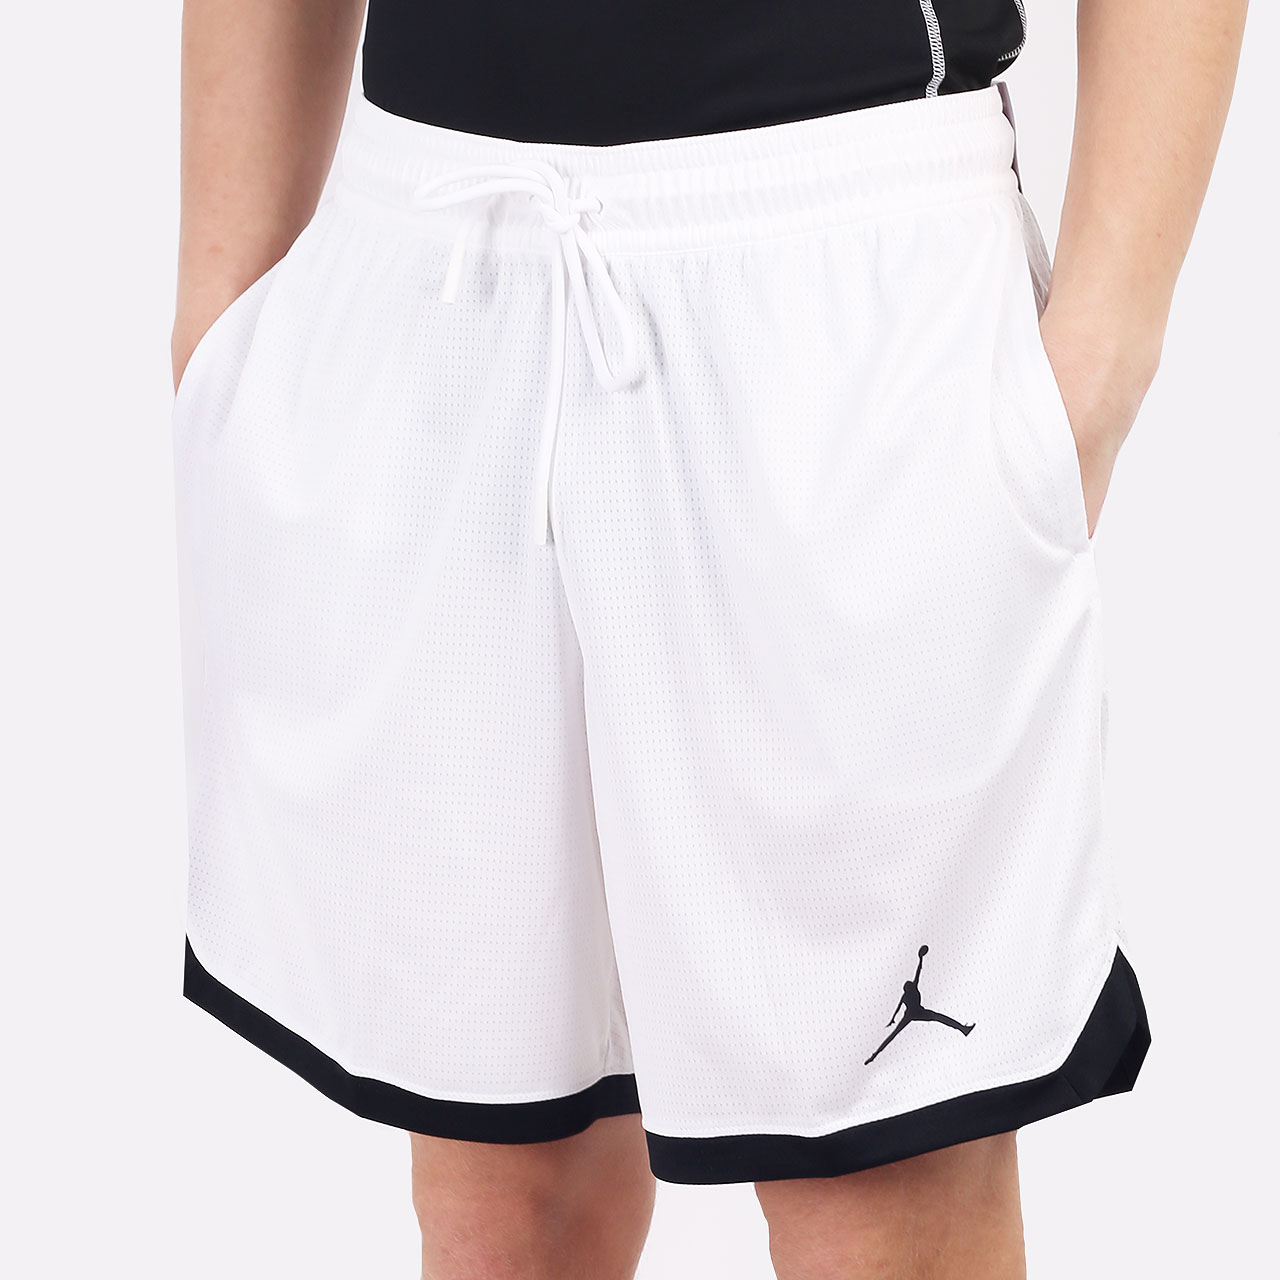 Мужские шорты Jordan Dri-FIT Air Knit (DH2040-100) купить по цене 1790 руб в интернет-магазине Streetball